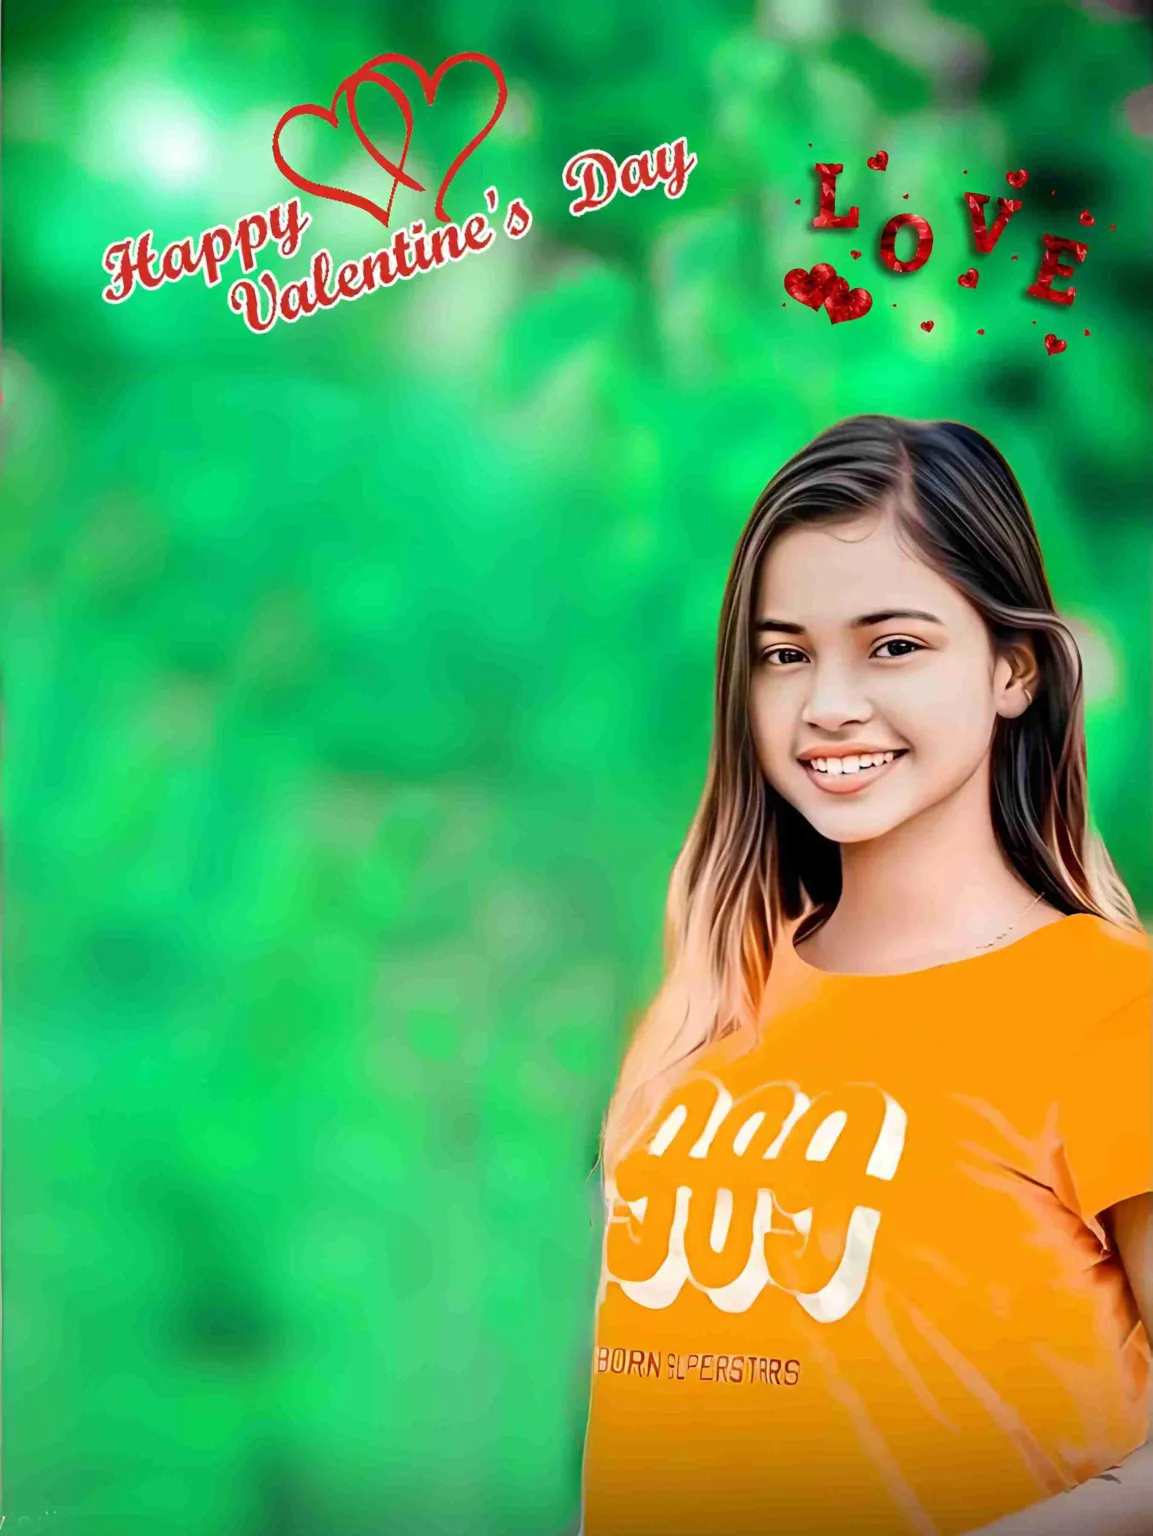 Picsart valentine day editing background